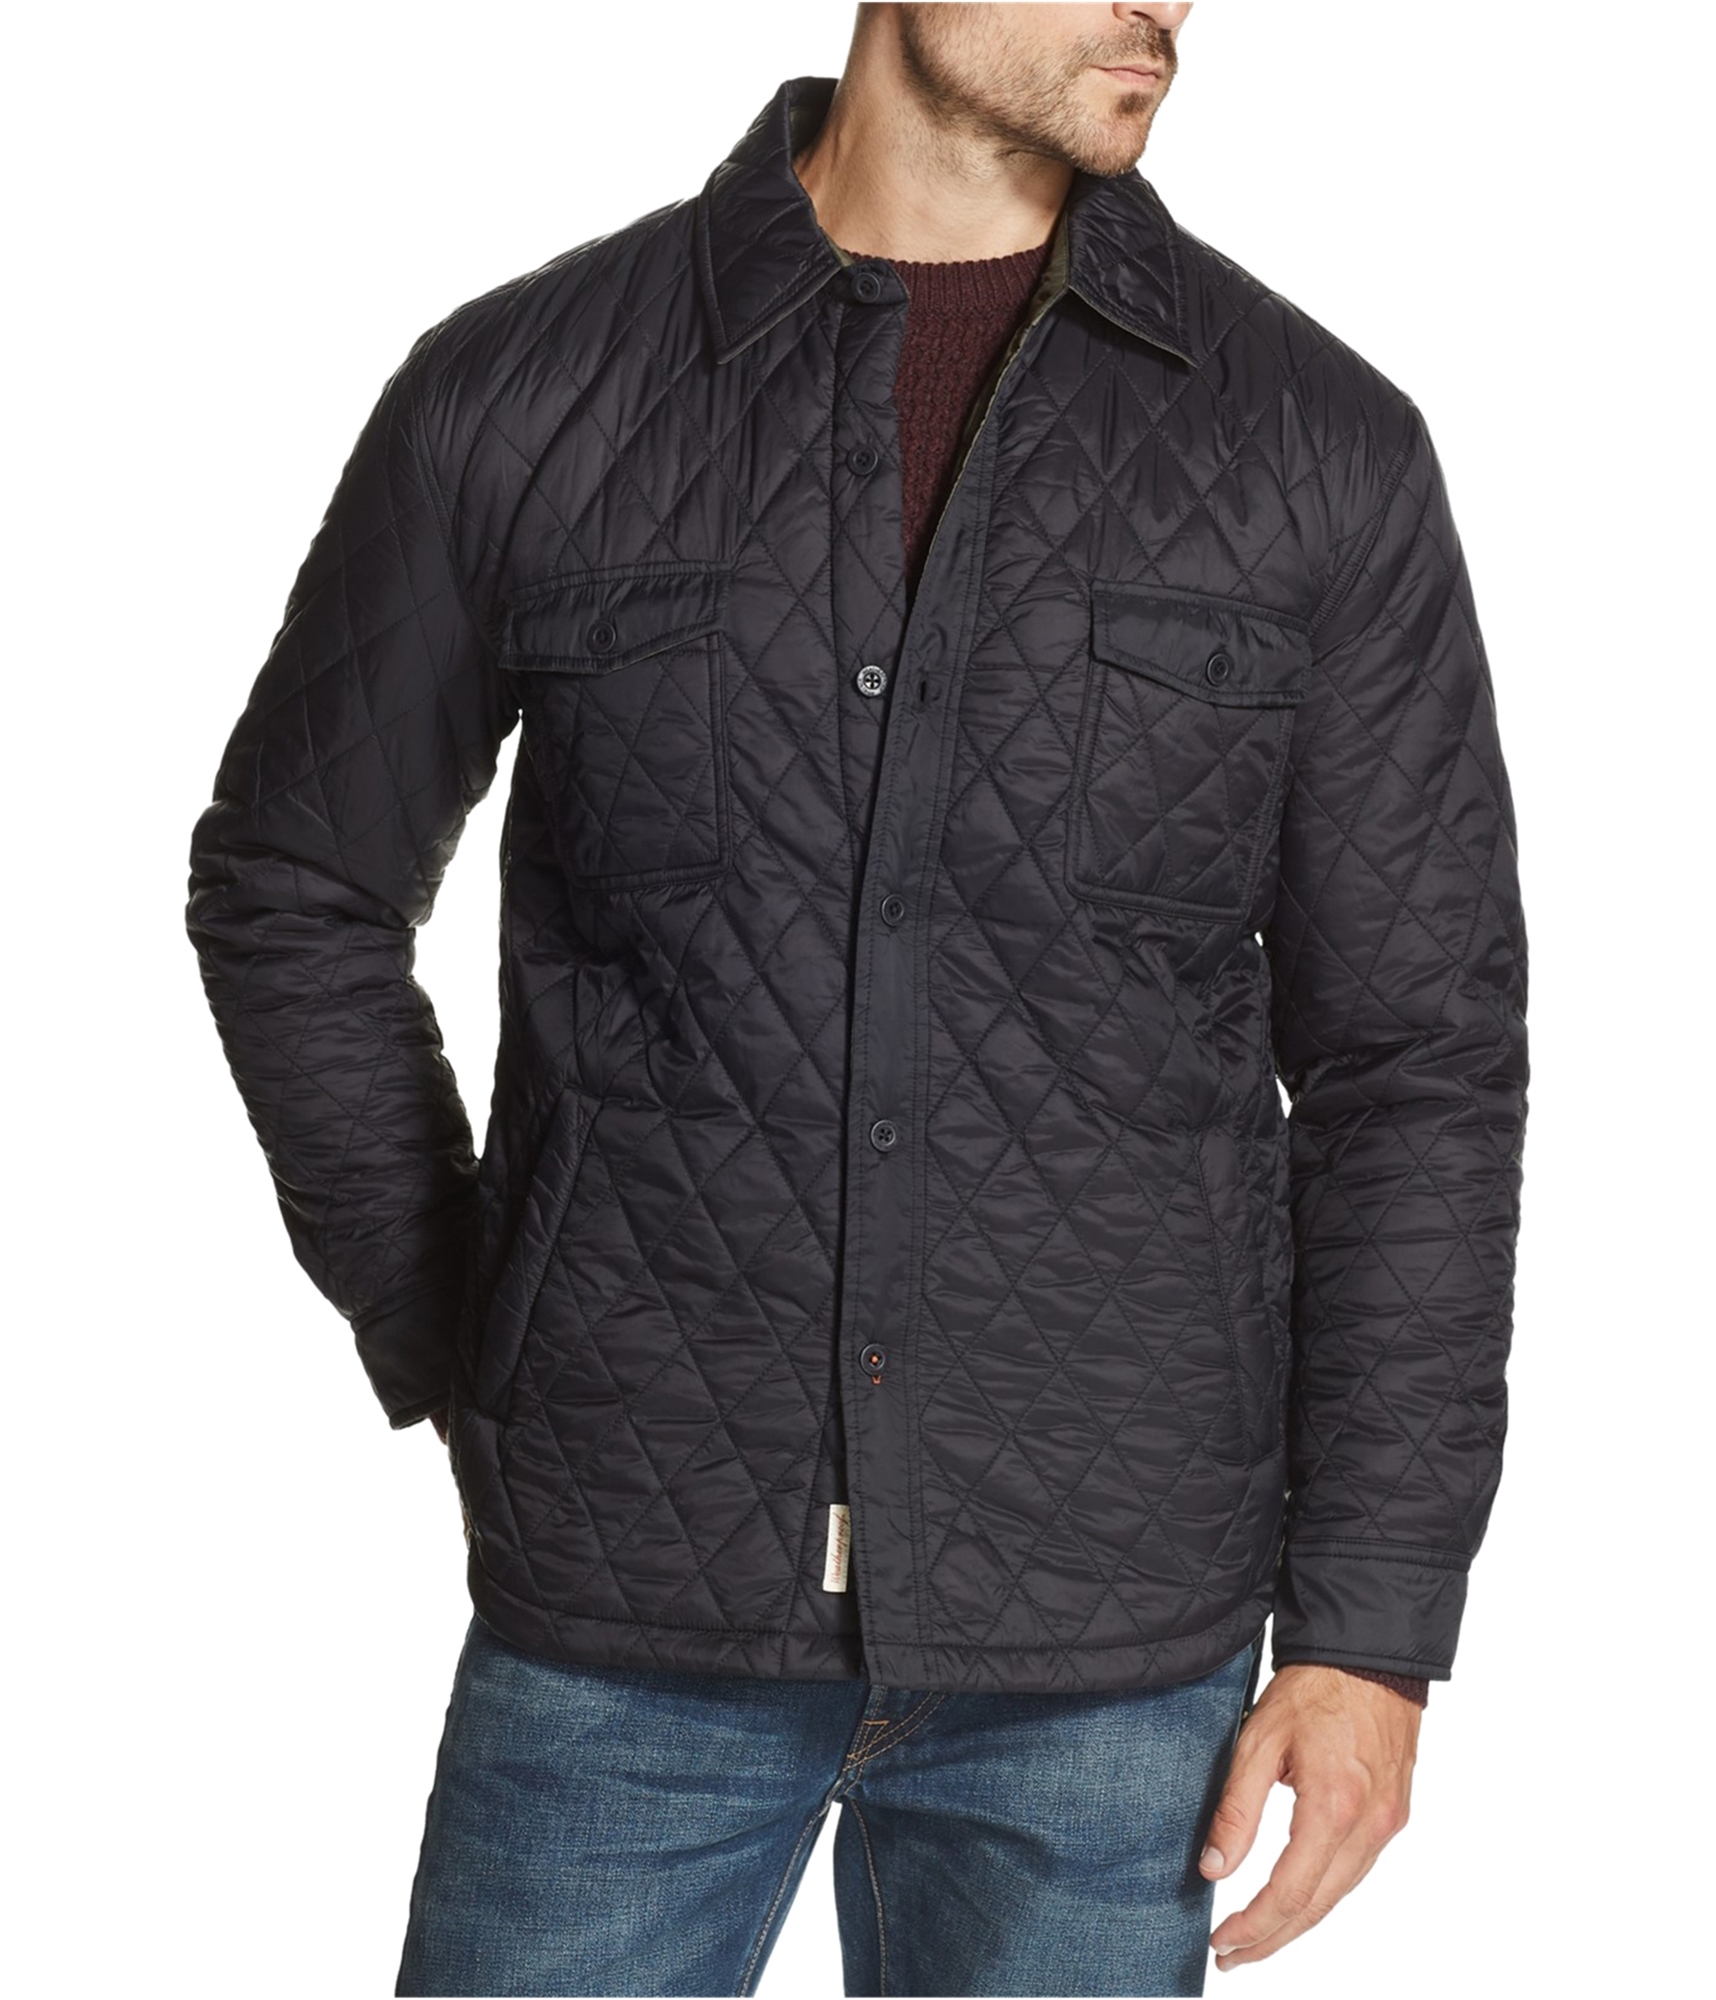 Buy a Mens Weatherproof Quilted Jacket Online | TagsWeekly.com